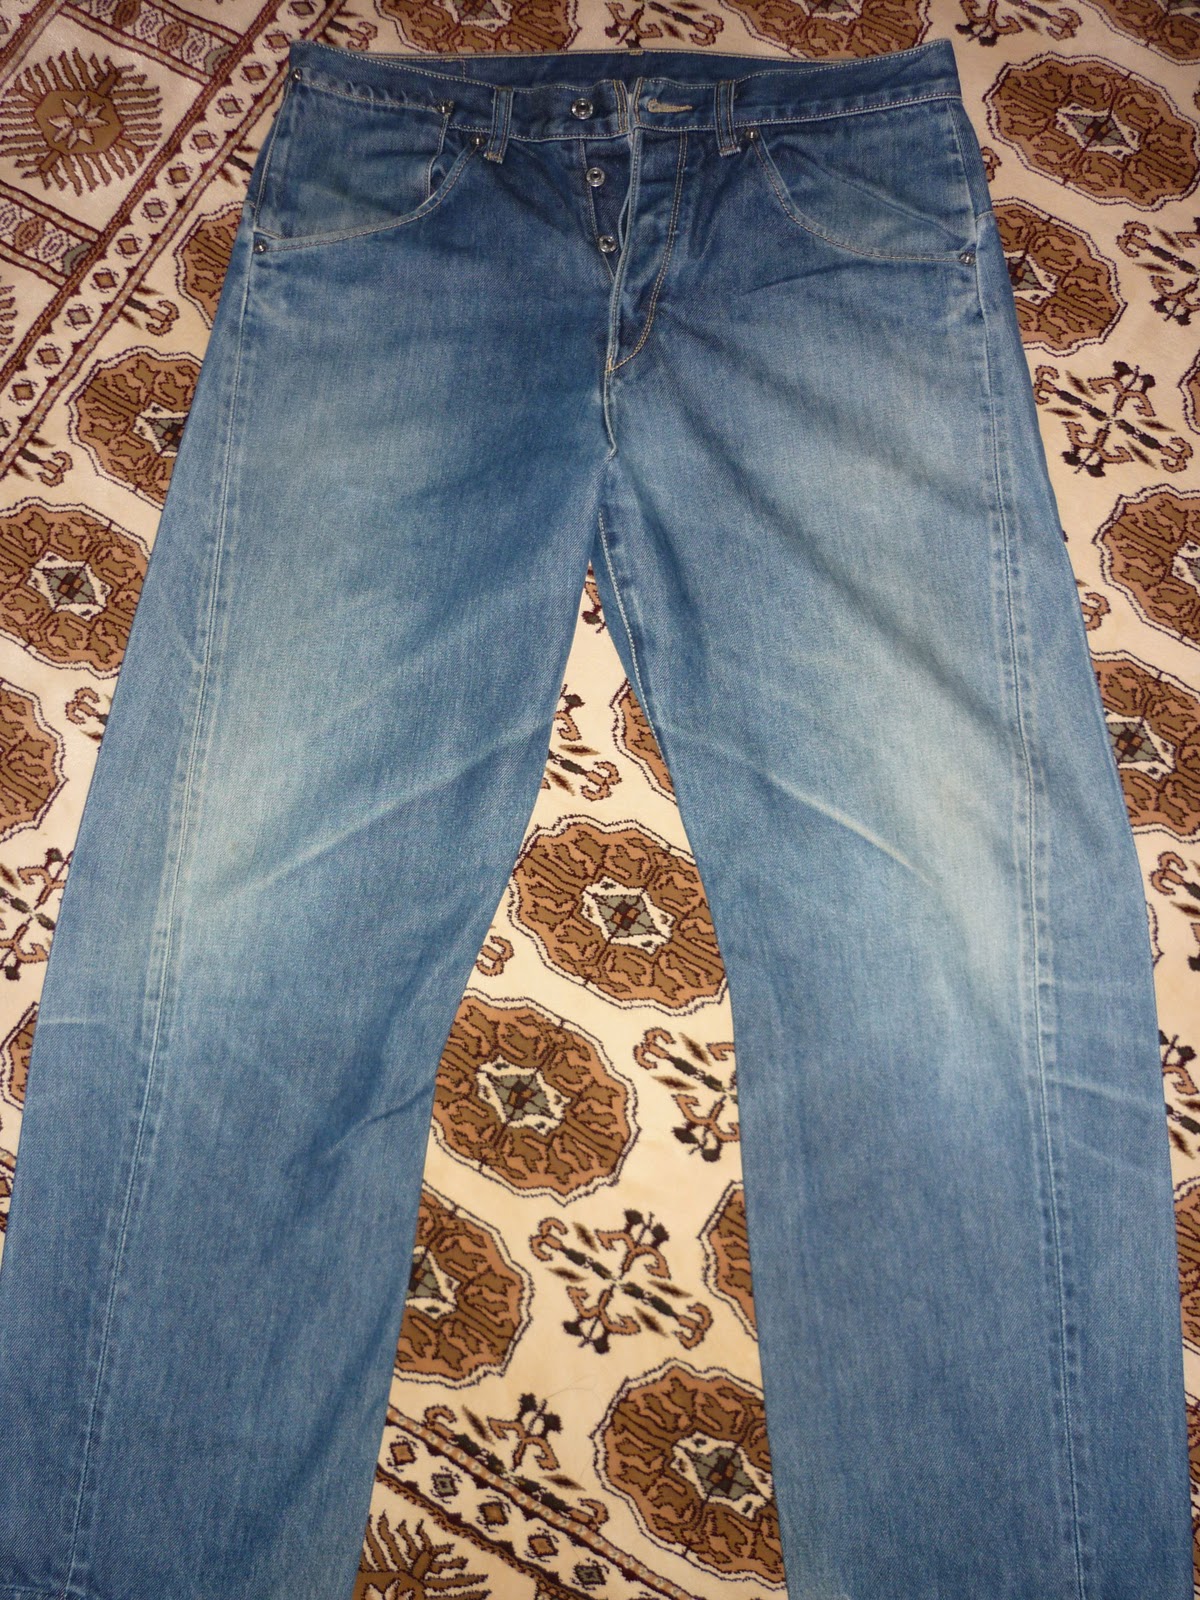 27Heaven Vintage: SOLD - Levis engineered Jeans 34